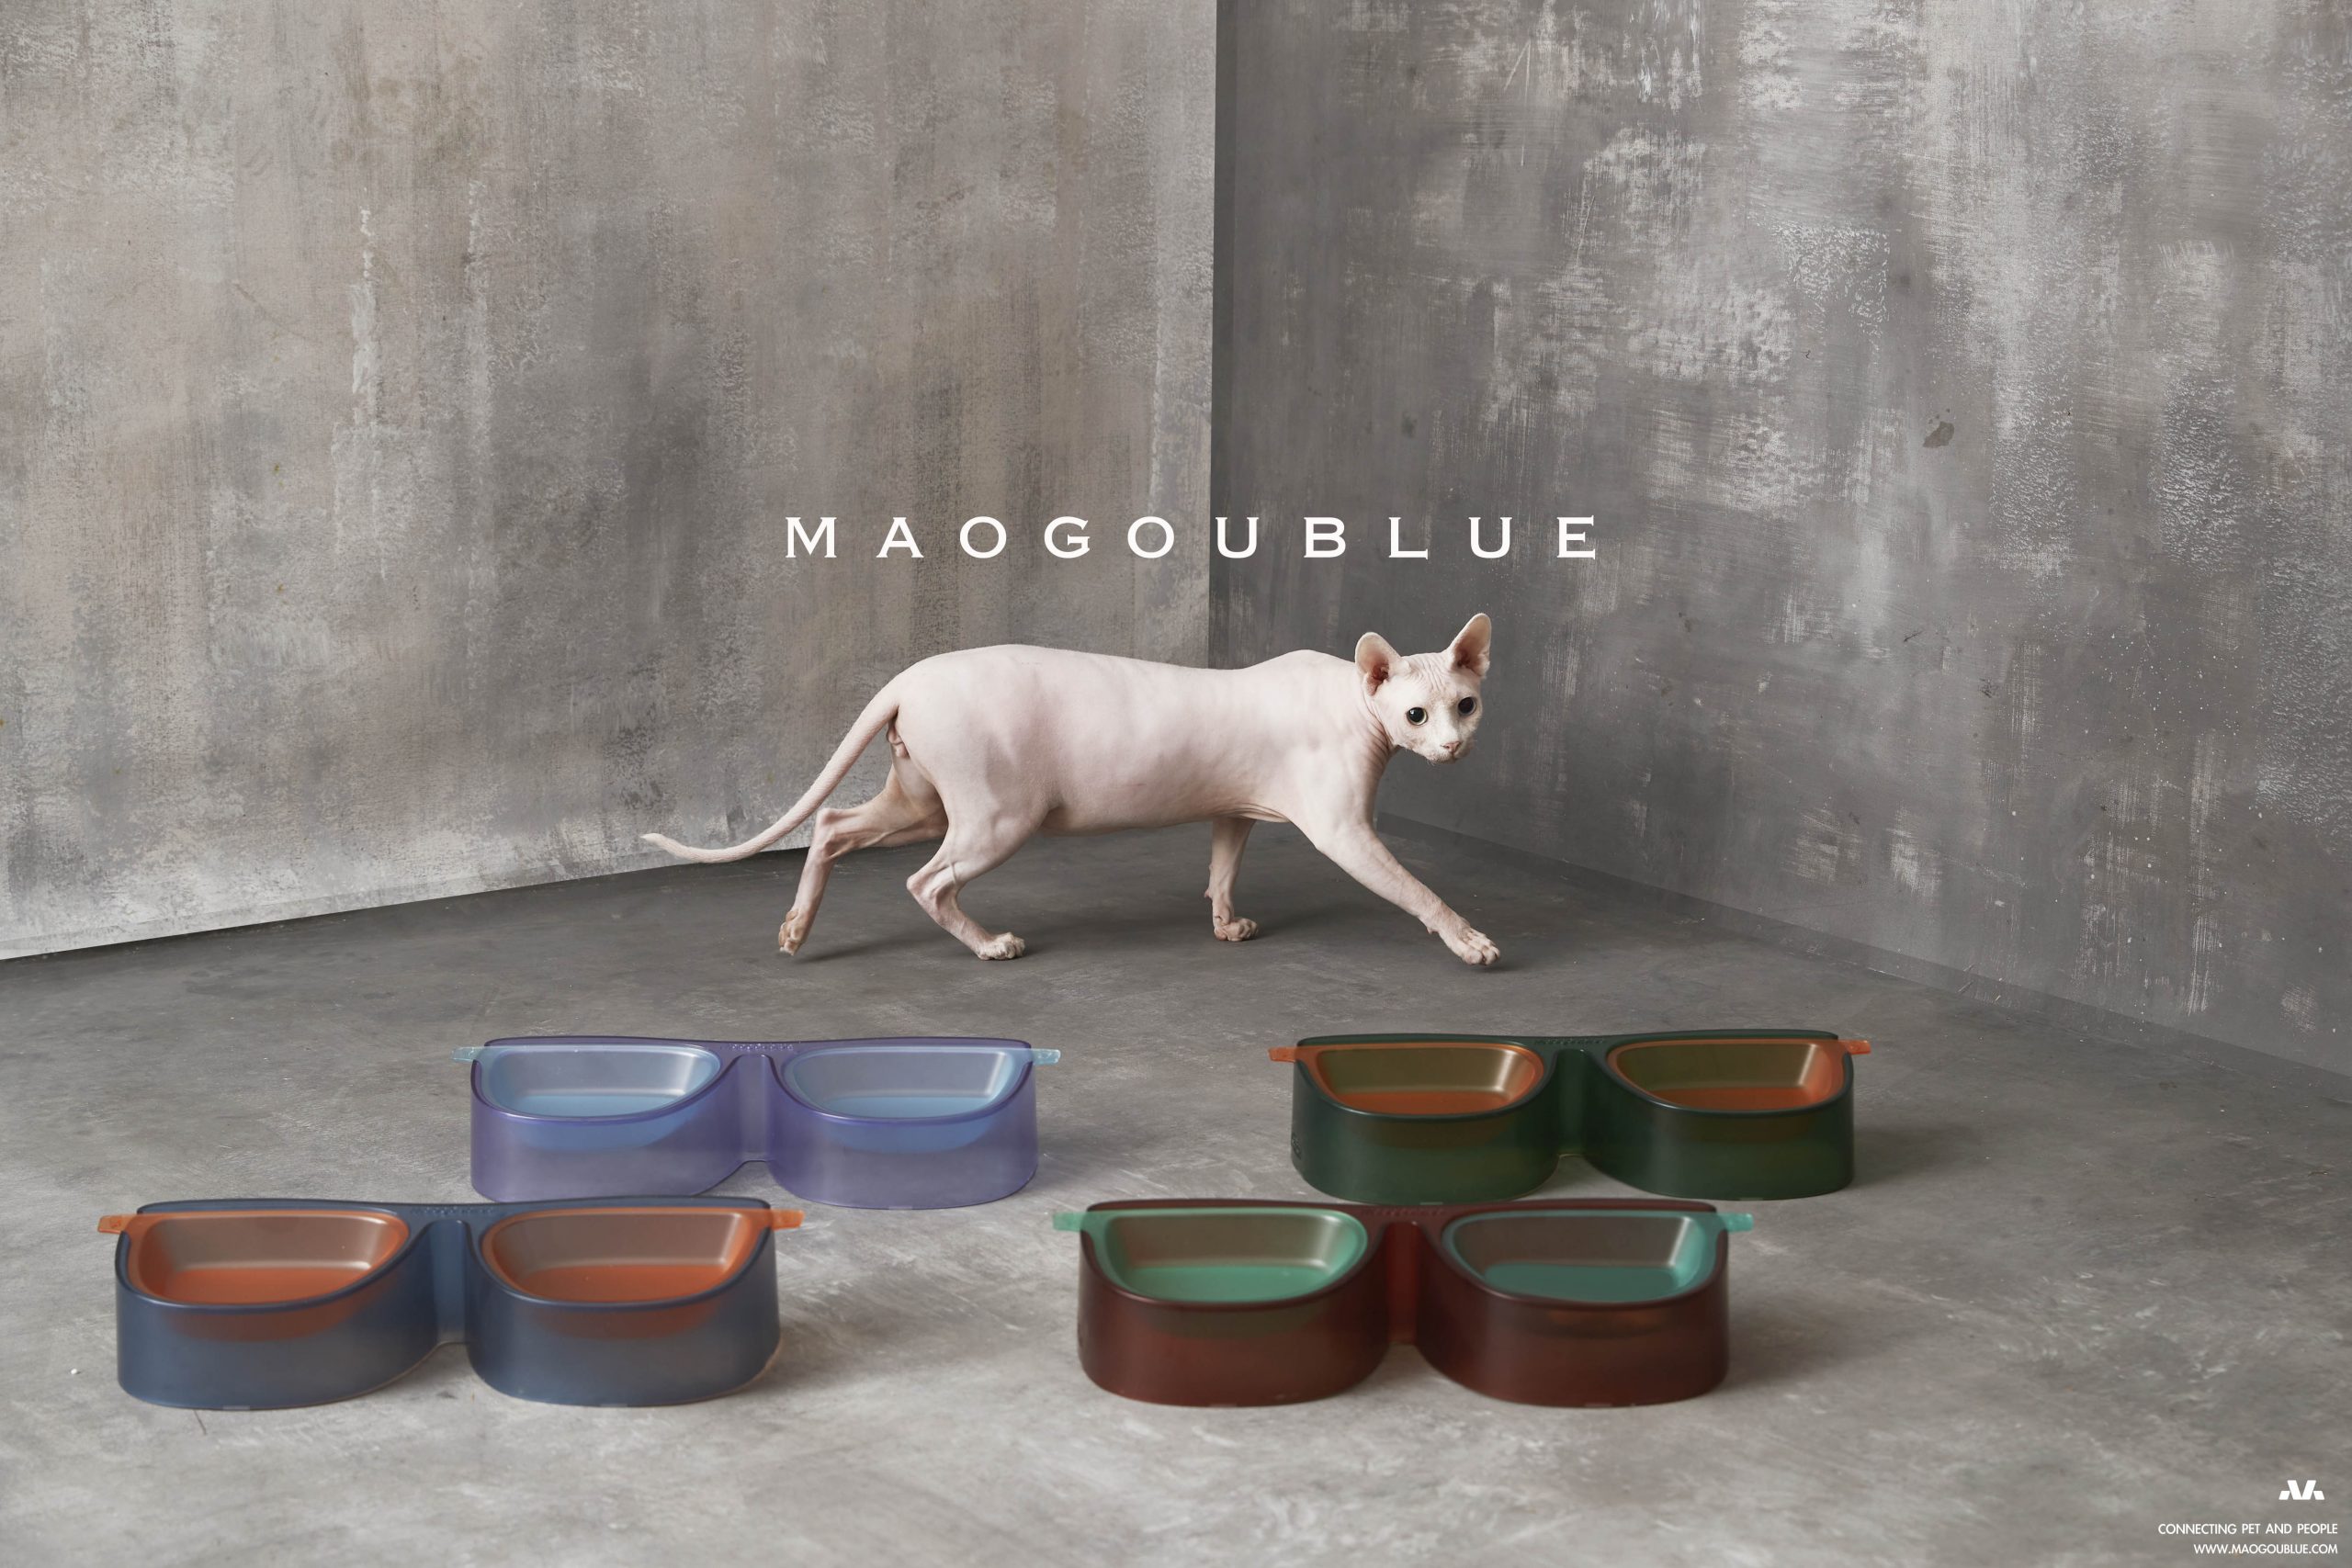 Maogoublue 发布全新「HEICHAO」系列猫狗喂食碗